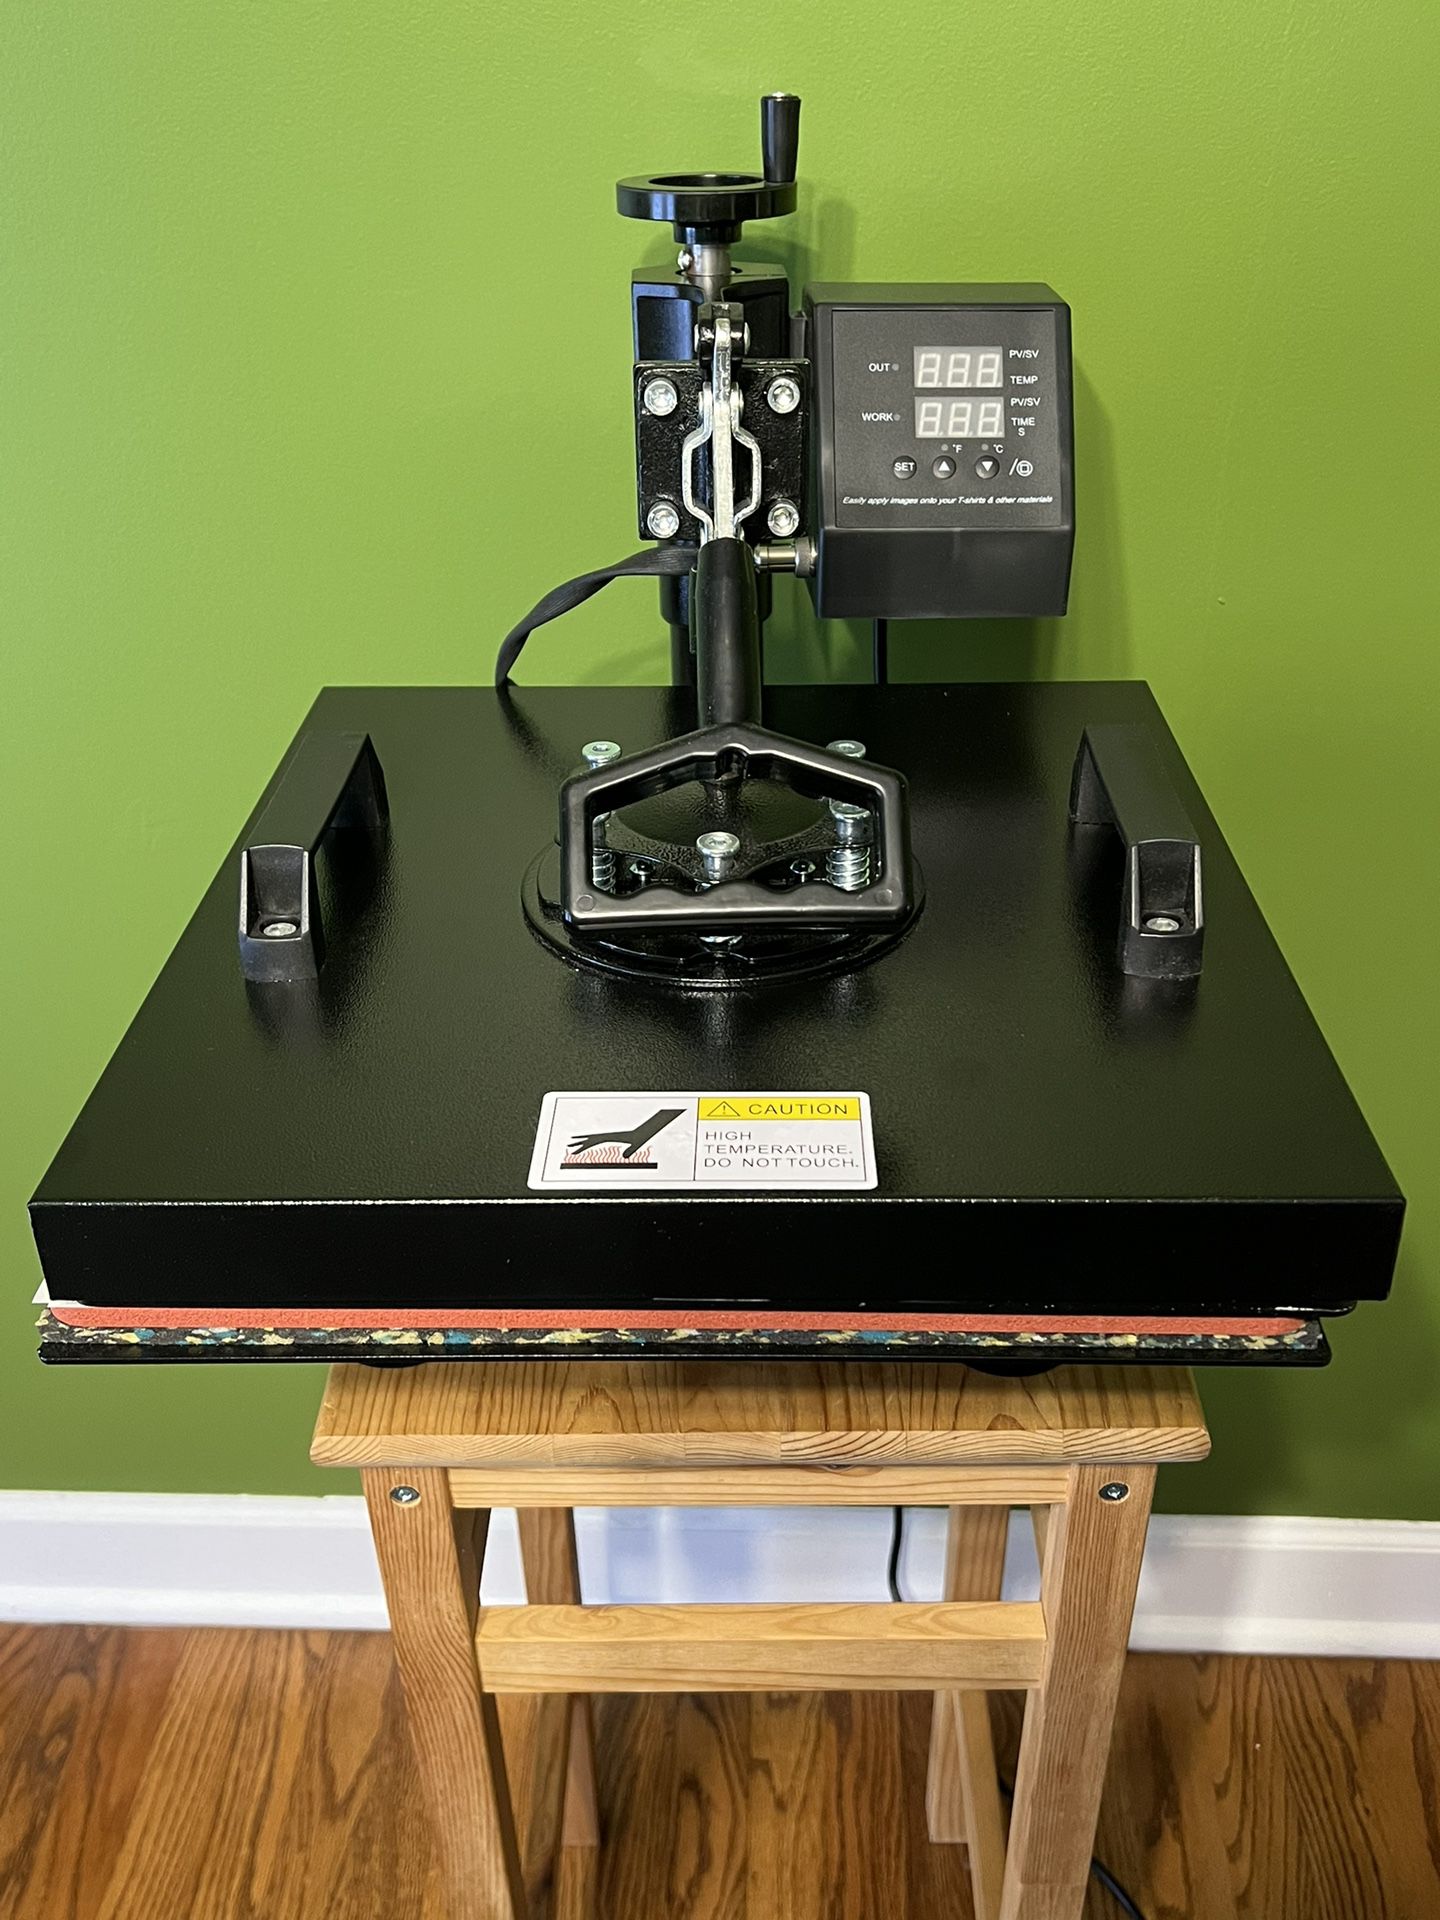 Heat Press Machine, Vinyl Cutter Printer & Accessories (Package Deal)